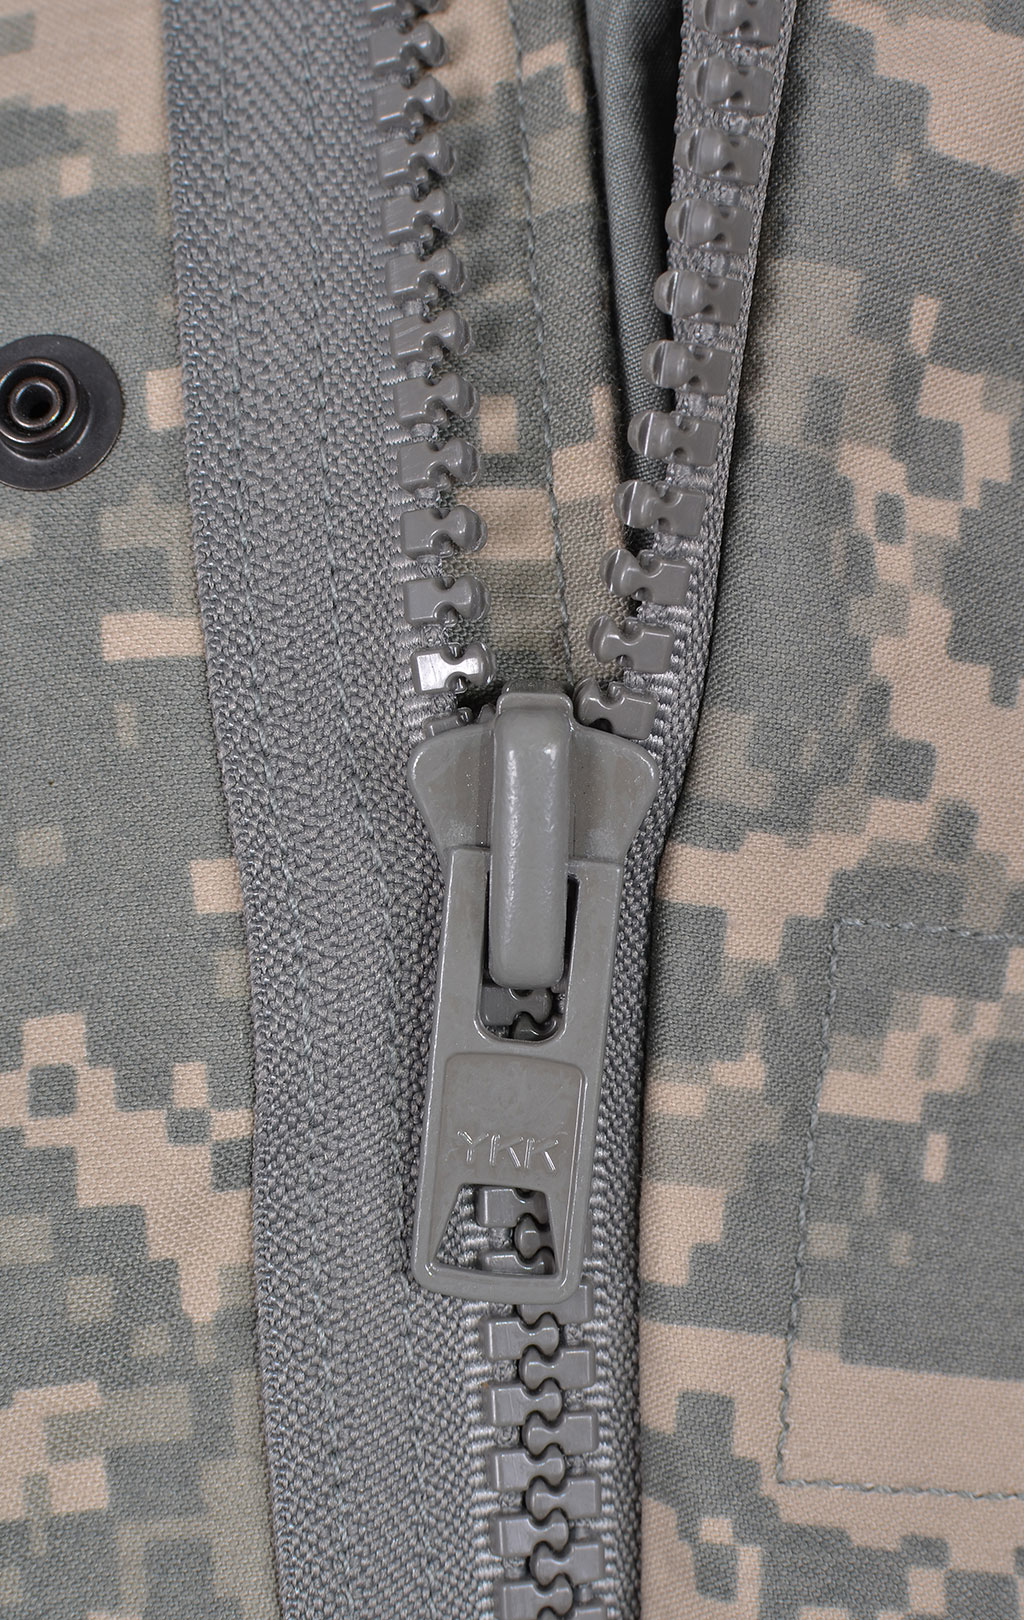 Куртка армейская CLASSIC M-65 acu США